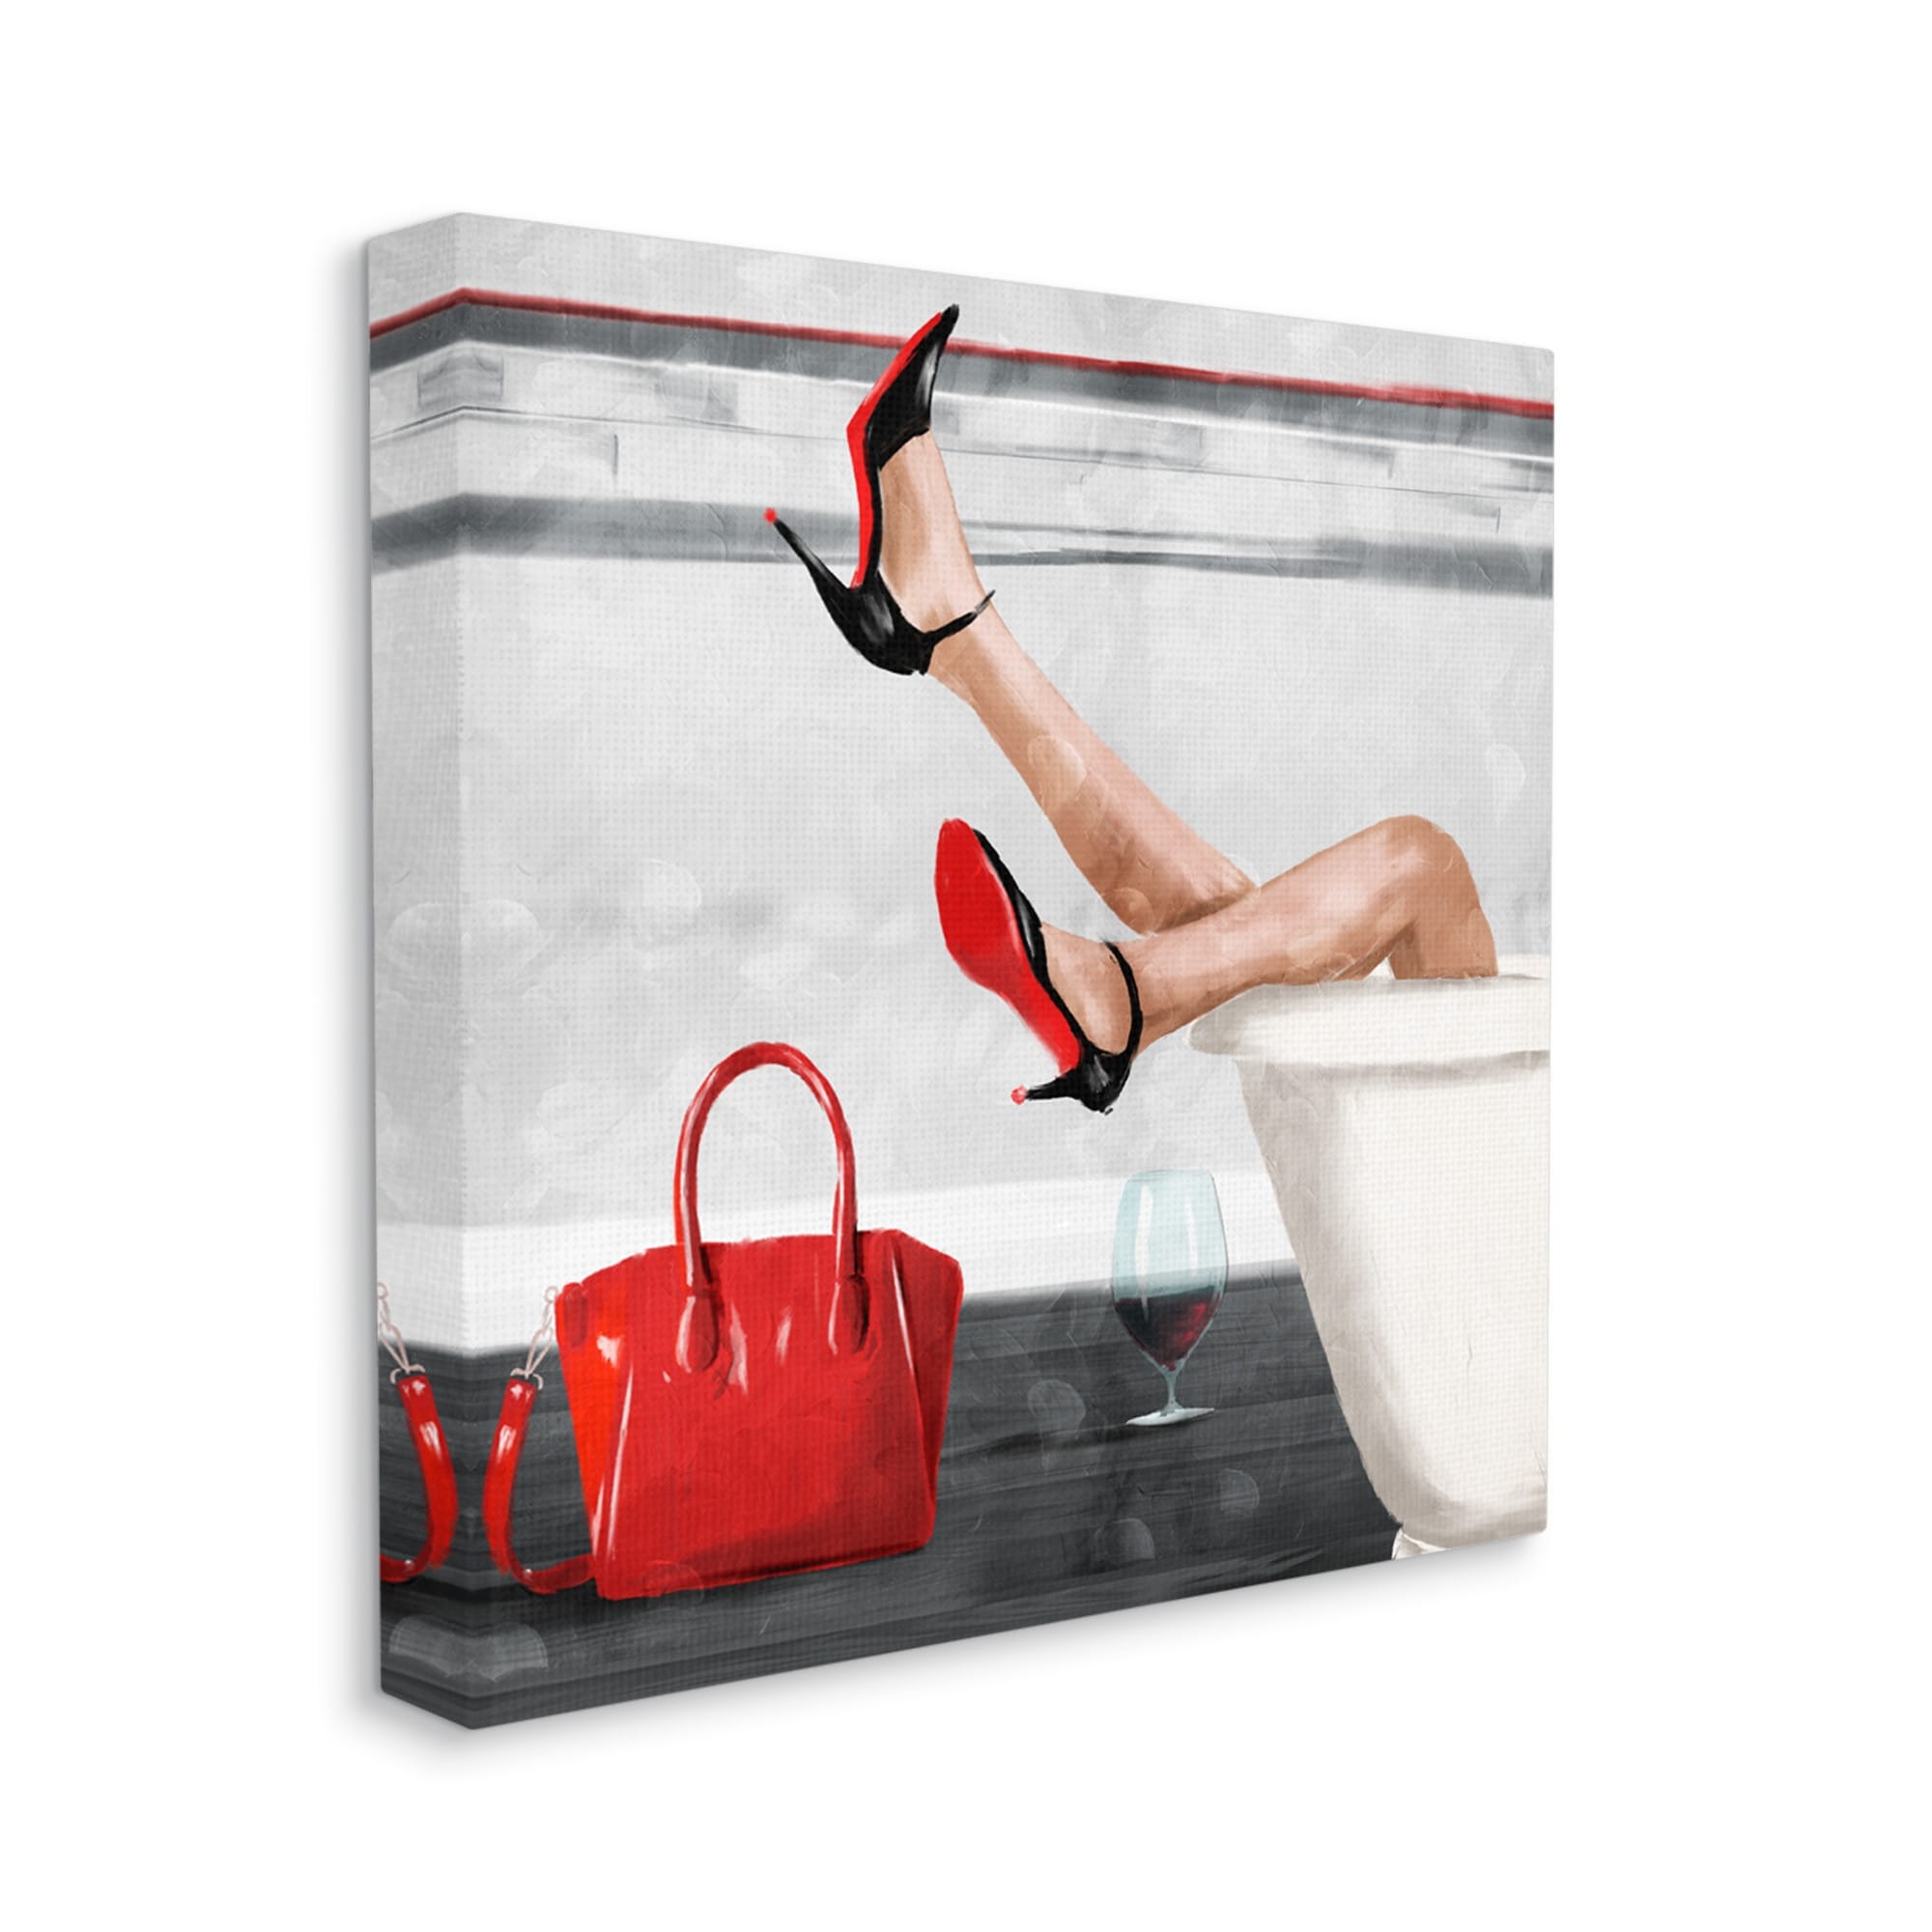 Stupell Red Bottom Heels Glam Fashion Bookstack Framed Wall Art - Black - 11 x 14